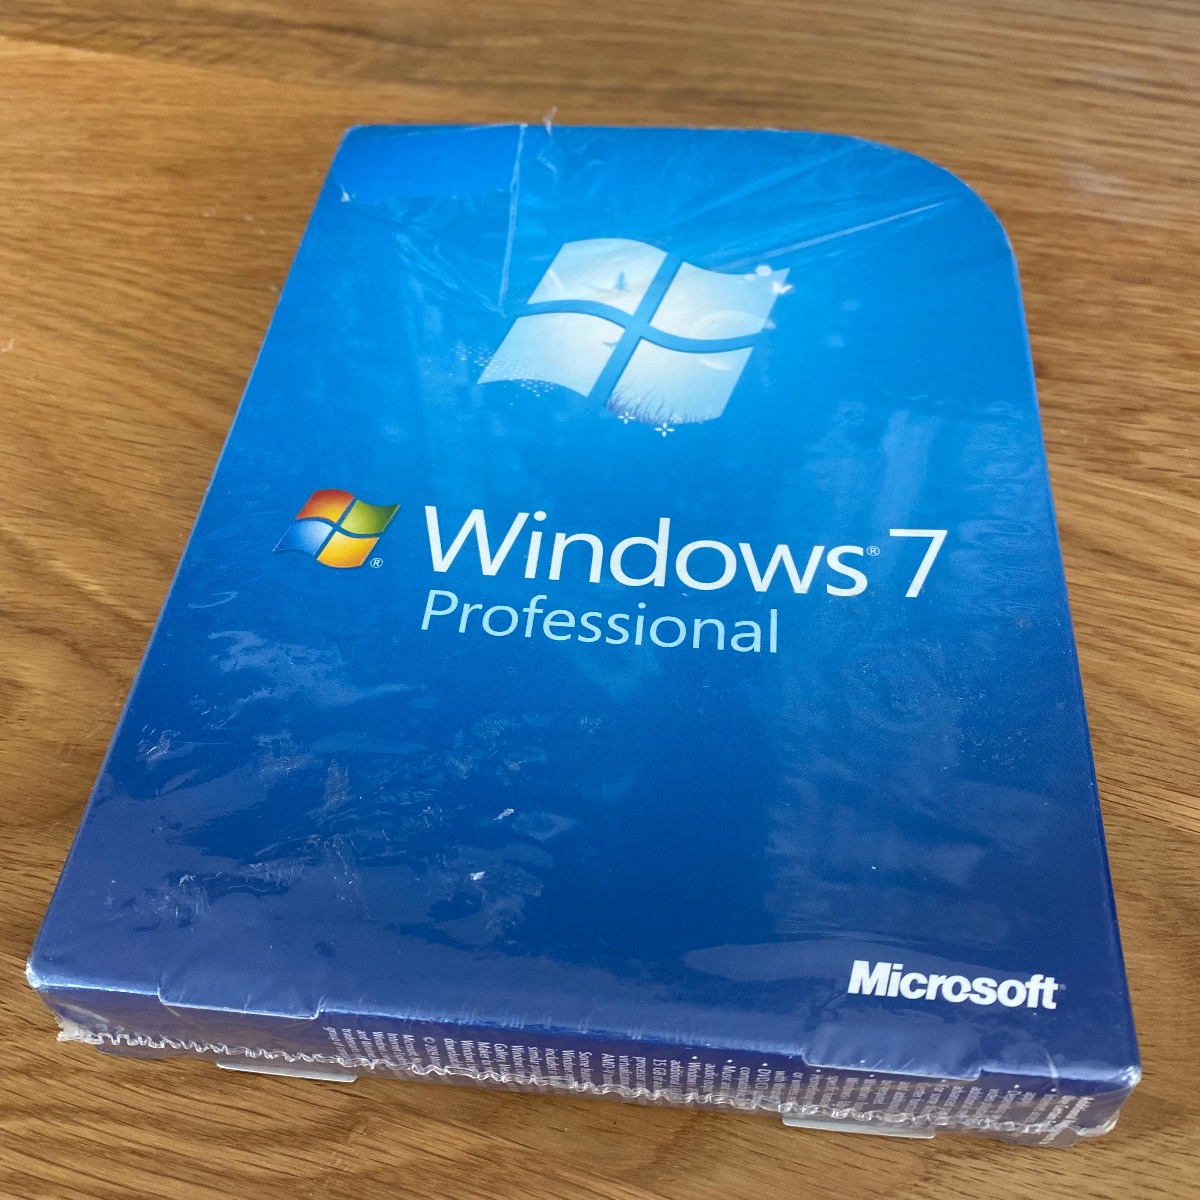 Windows 7 Professional 32/64-Bit DVD Sealed FQC-00133 100% Genuine UK Retail FQC-00133 0008222488354 (Previously Used)